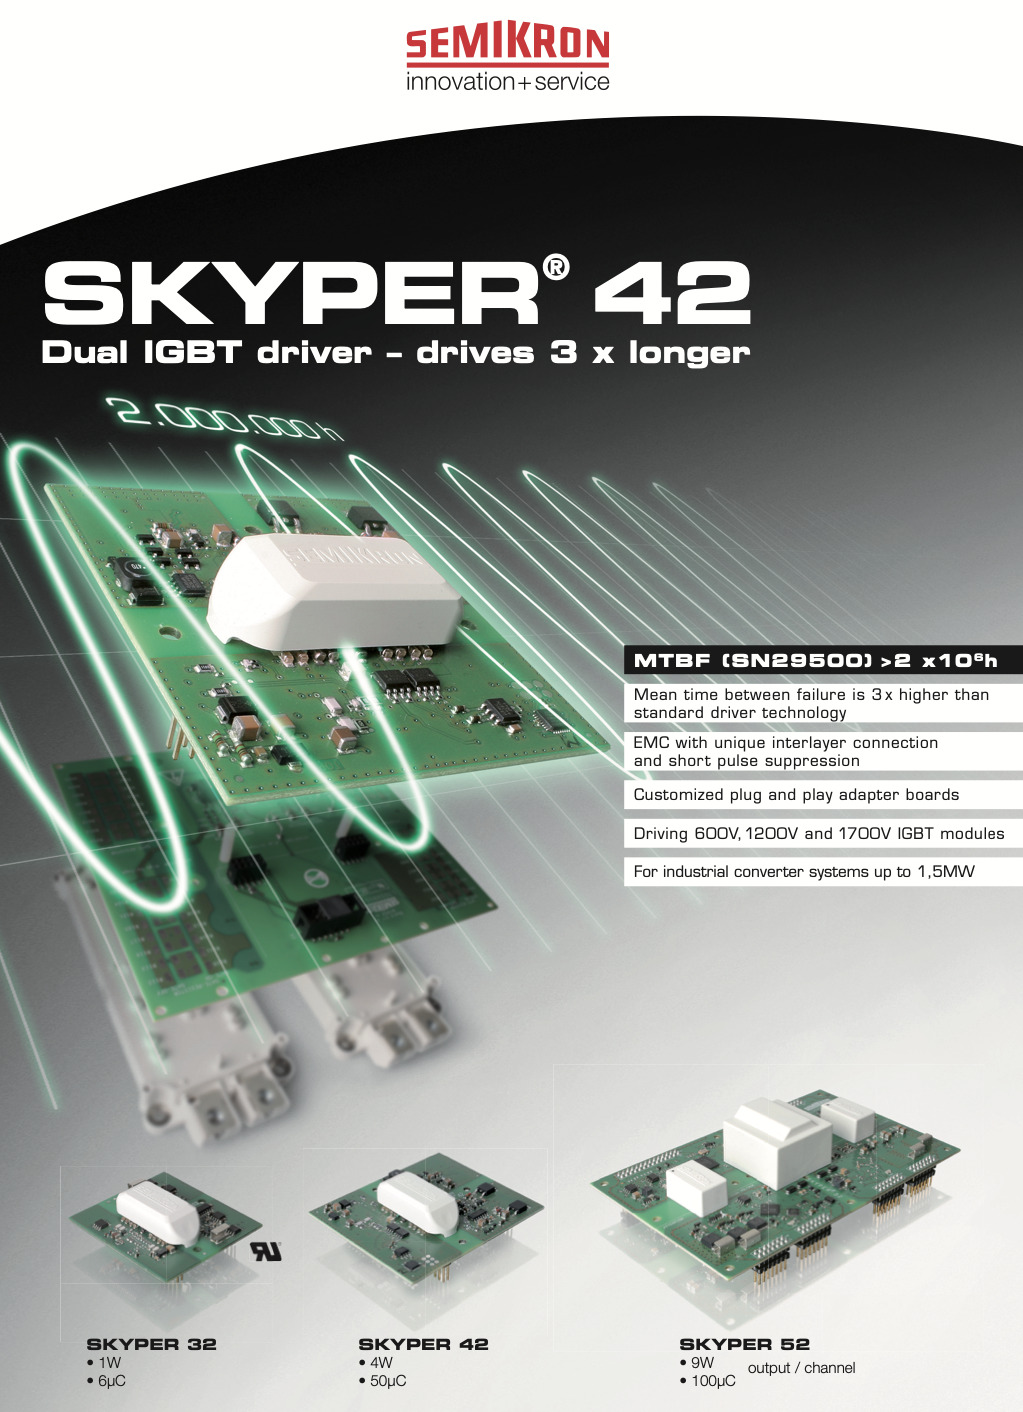 Semikron Skyper Dual IGBT Drivers